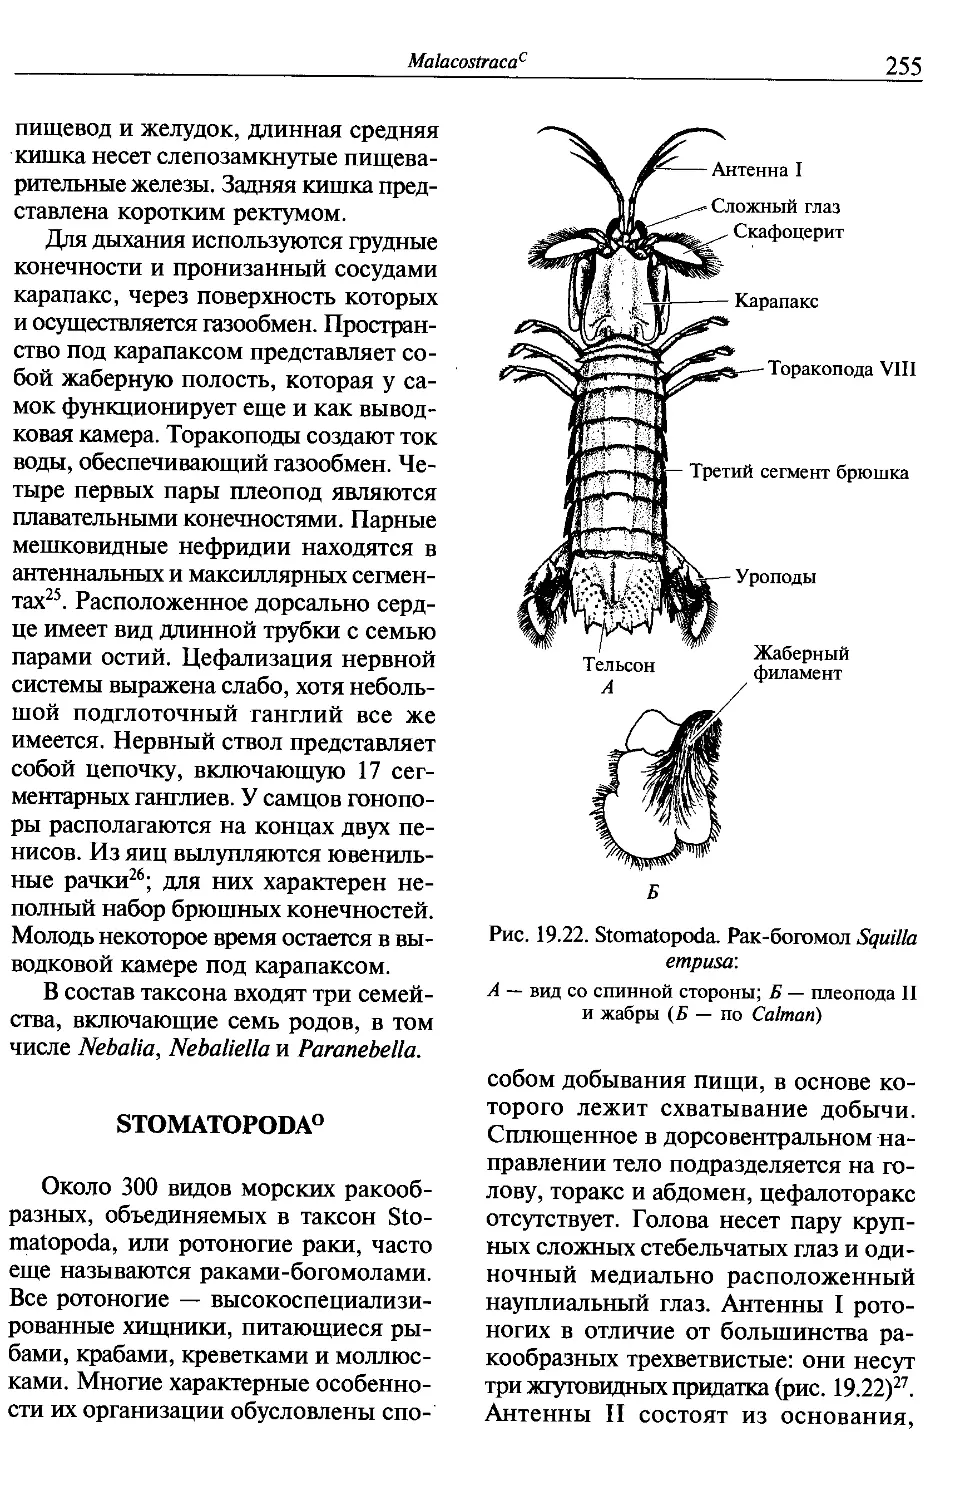 Stomatopoda